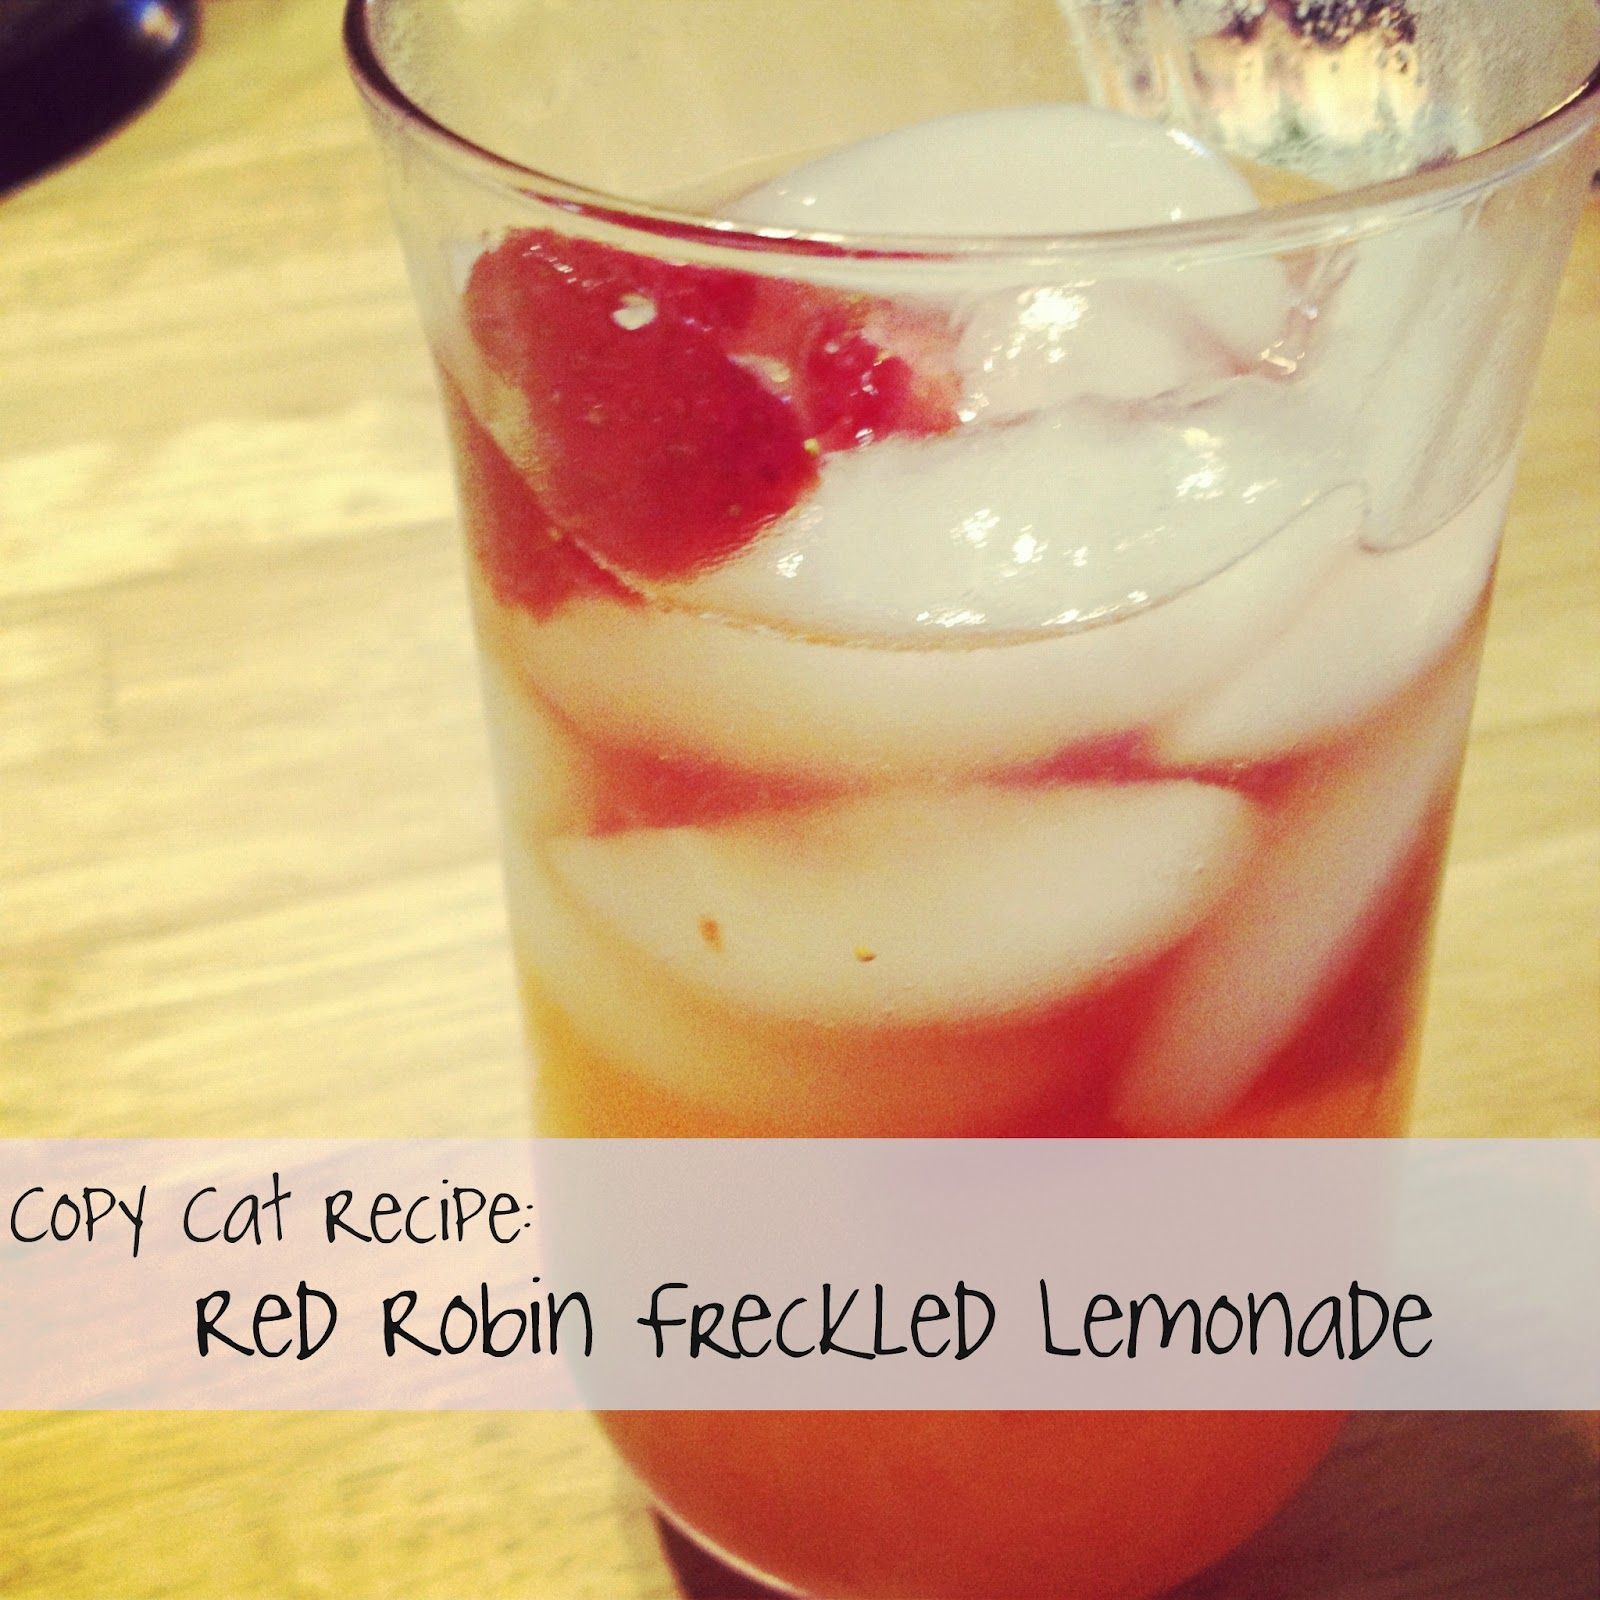 Copy Cat Recipe: Red Robin Freckled Lemonade (Strawberry Lemonade)